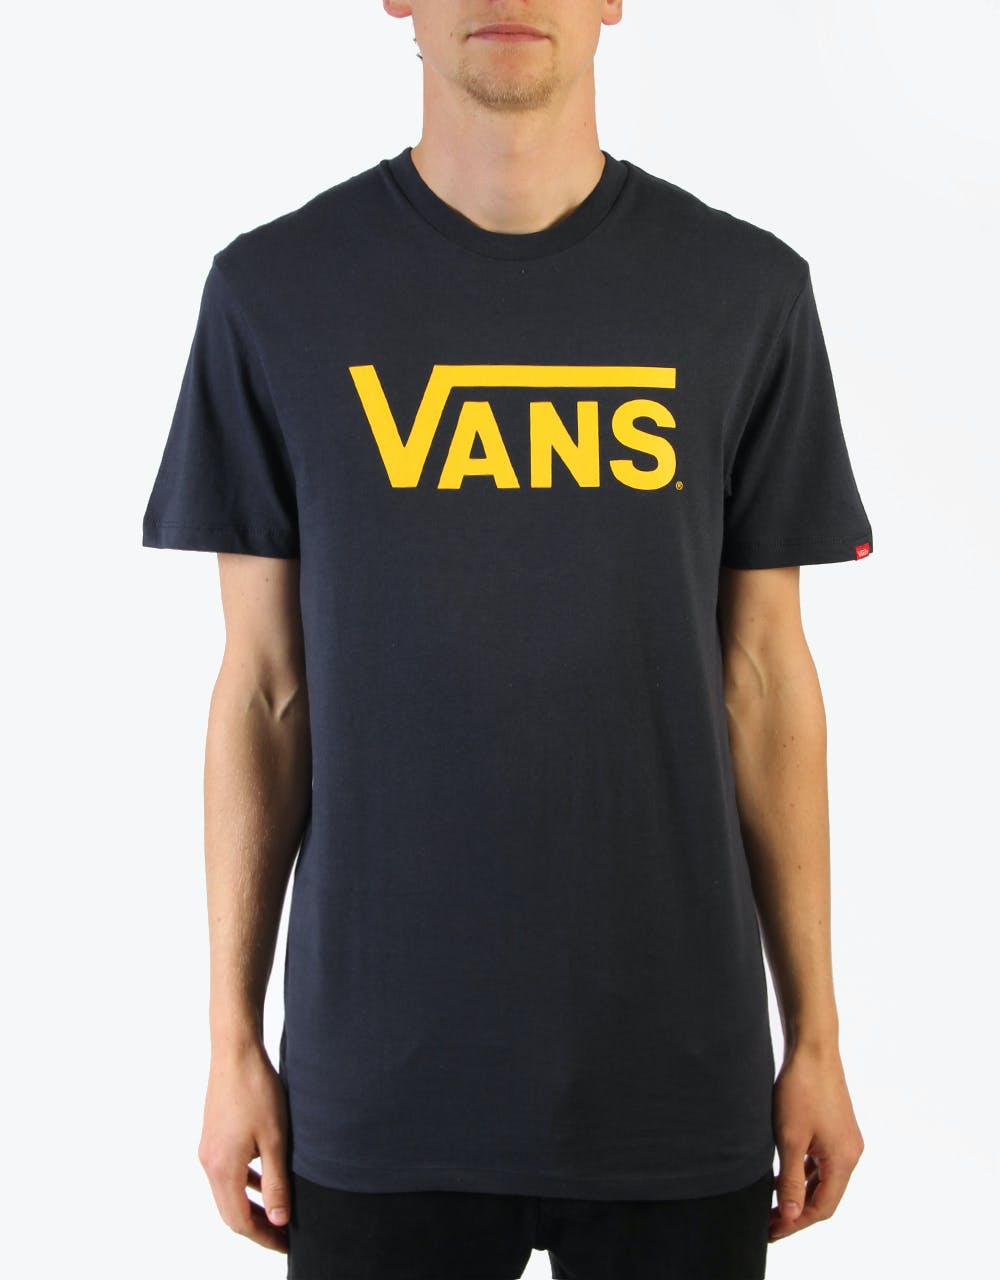 Vans Classic T-Shirt - Navy/Gold